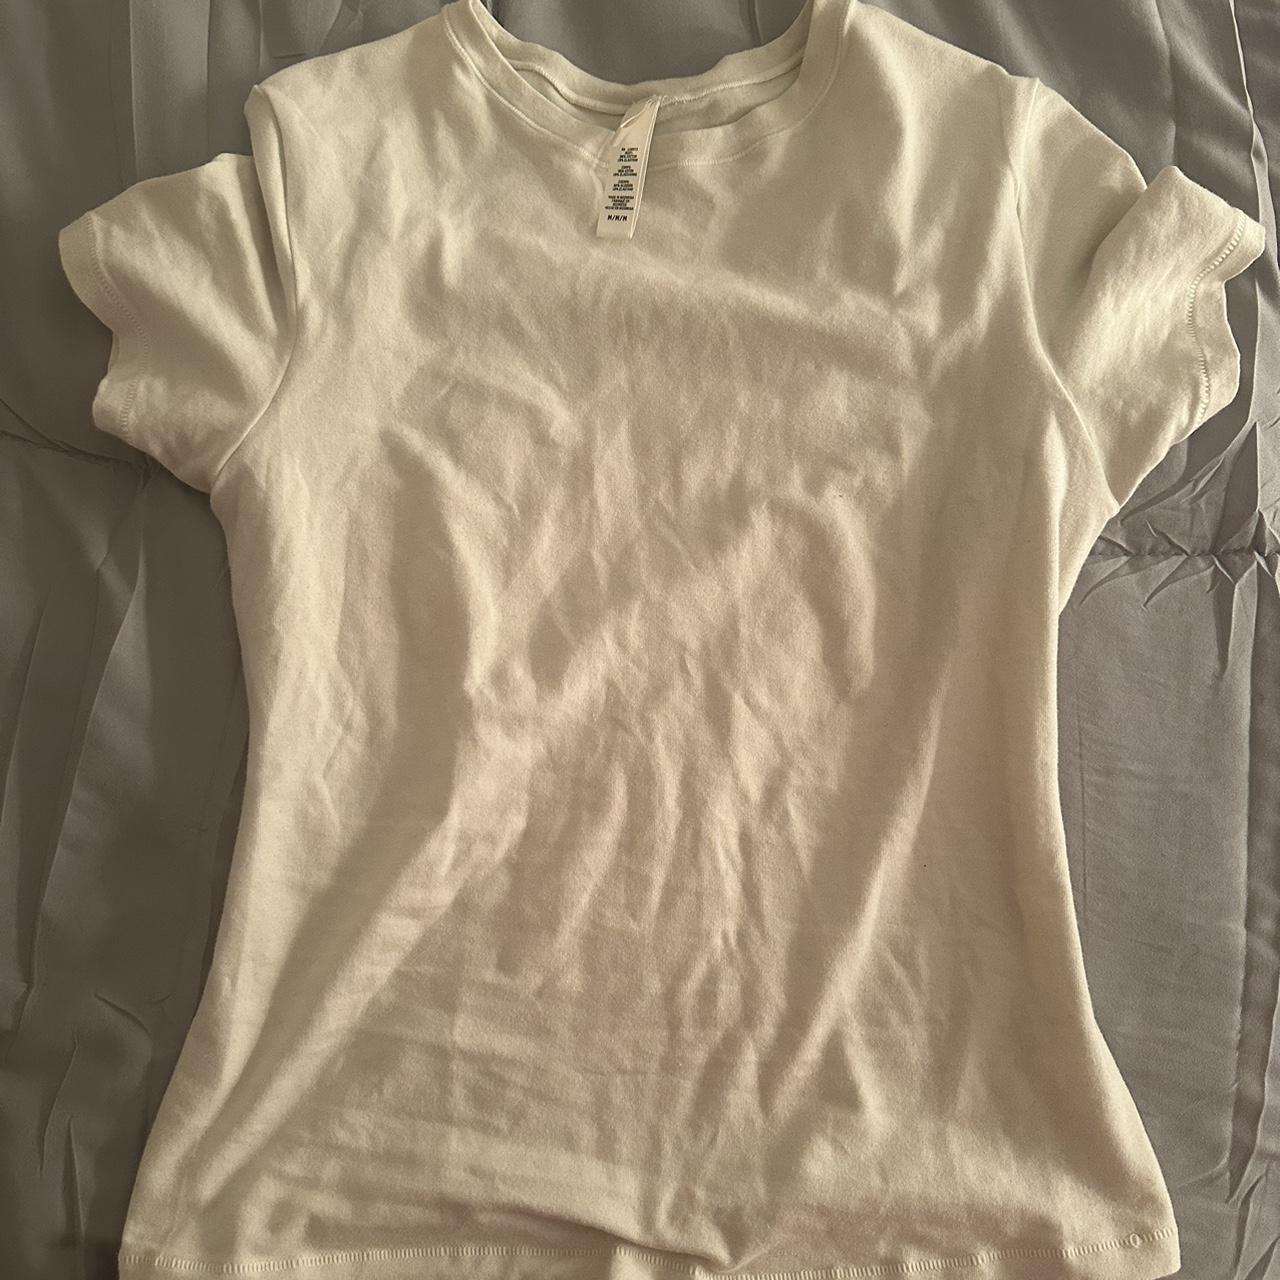 SKIMS cotton jersey t-shirt 🎀💝 - size M (super... - Depop